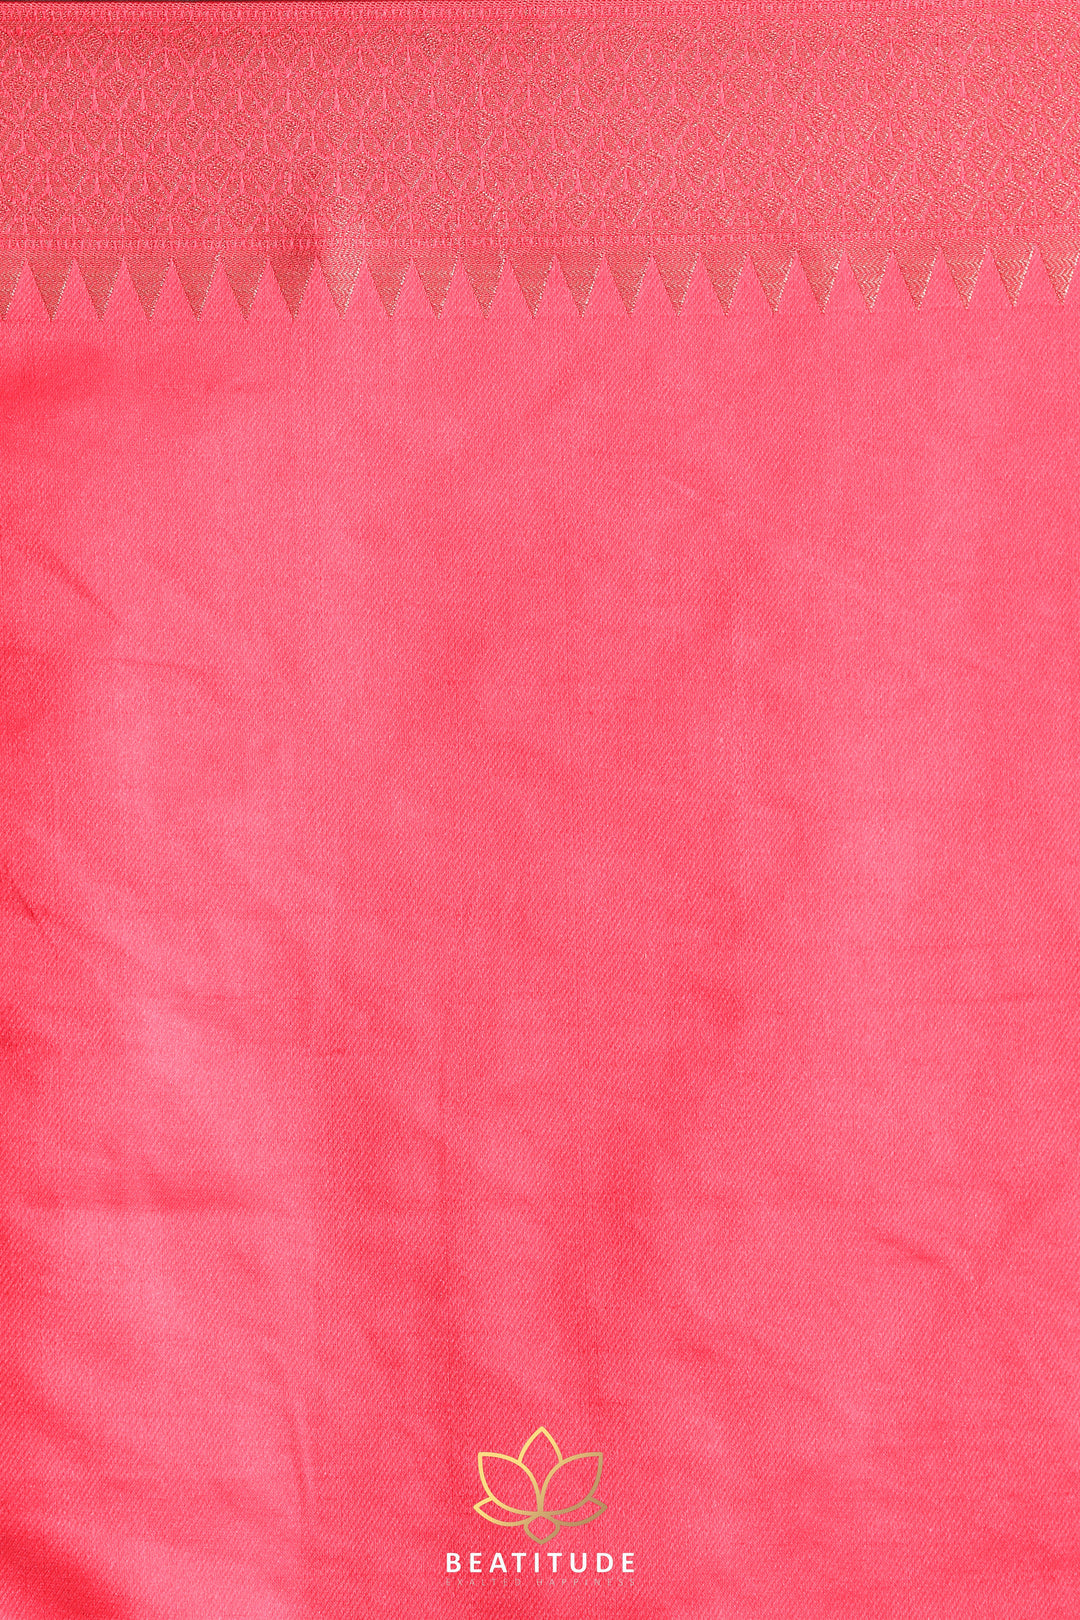 Beatitude Pink Woven Banarasi Saree with Unstitched Blouse